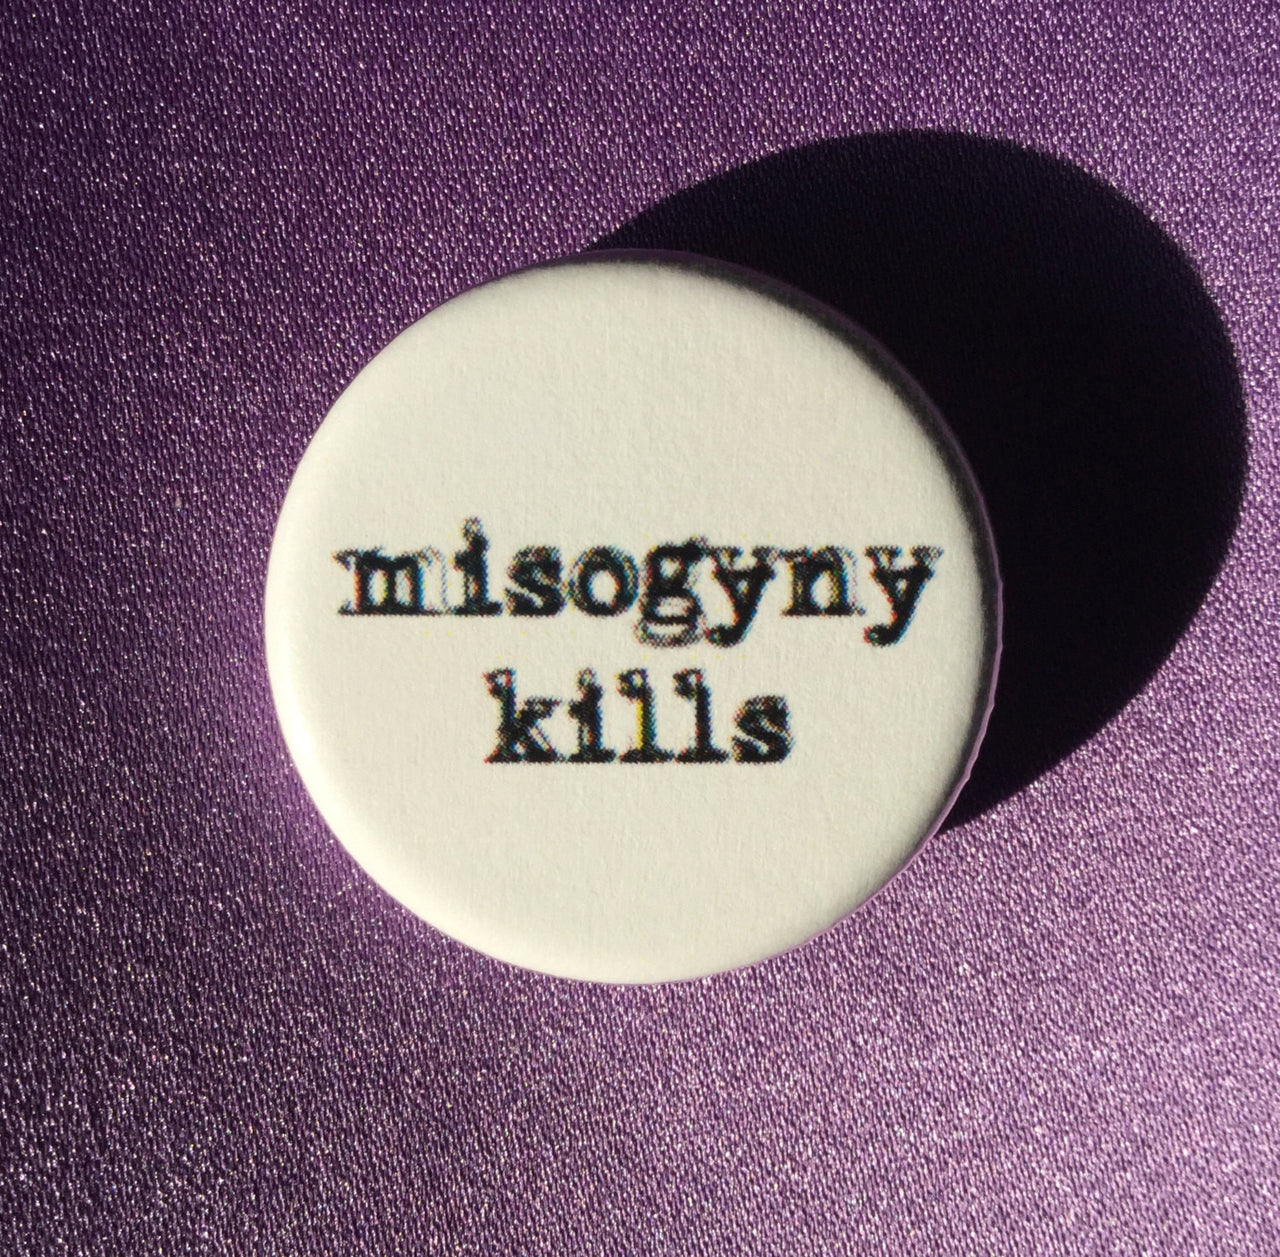 Misogyny kills - Radical Buttons